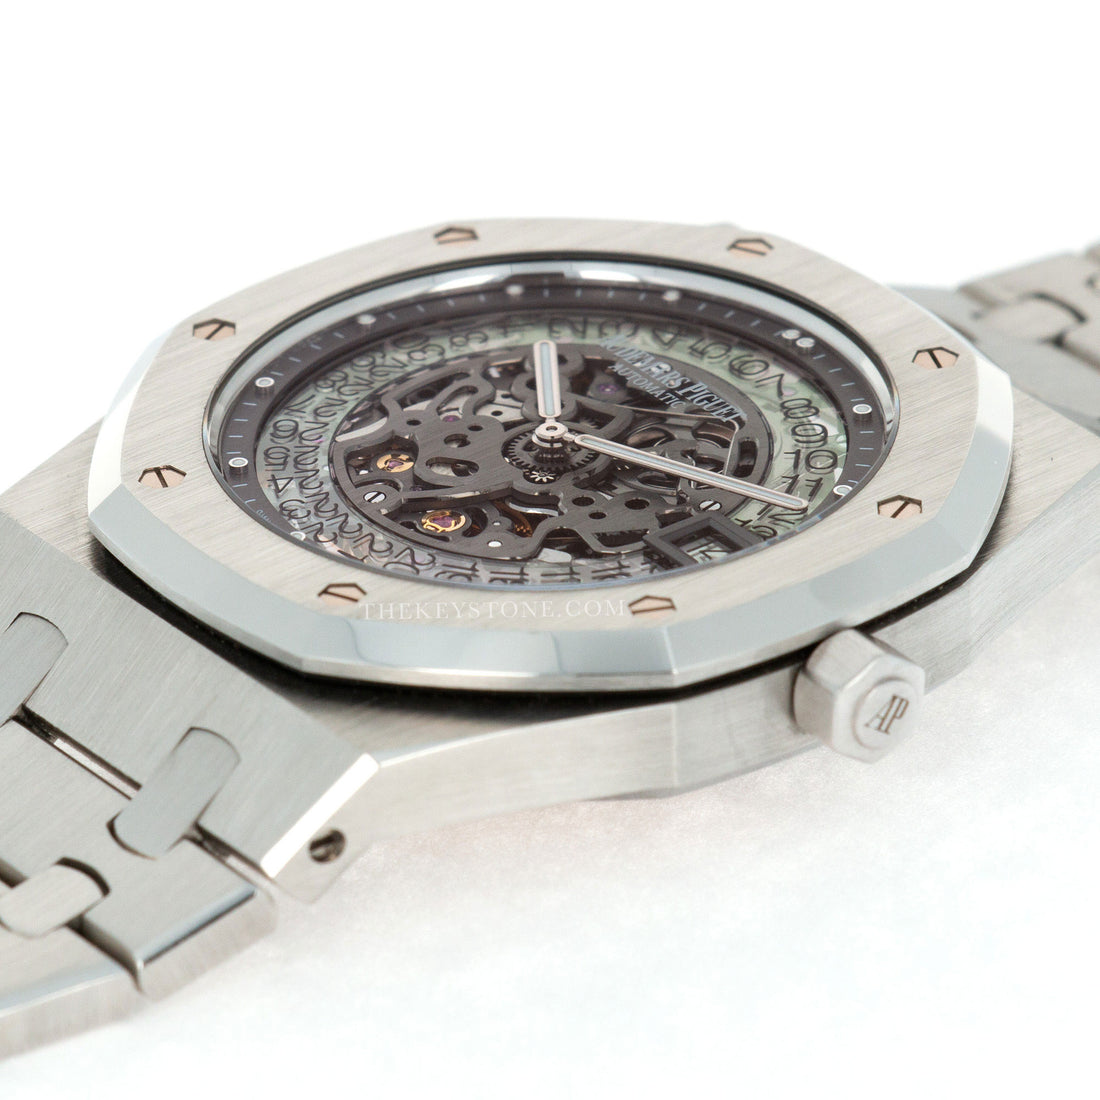 Audemars Piguet Royal Oak Platinum Skeletonized Watch, Ref. 15203